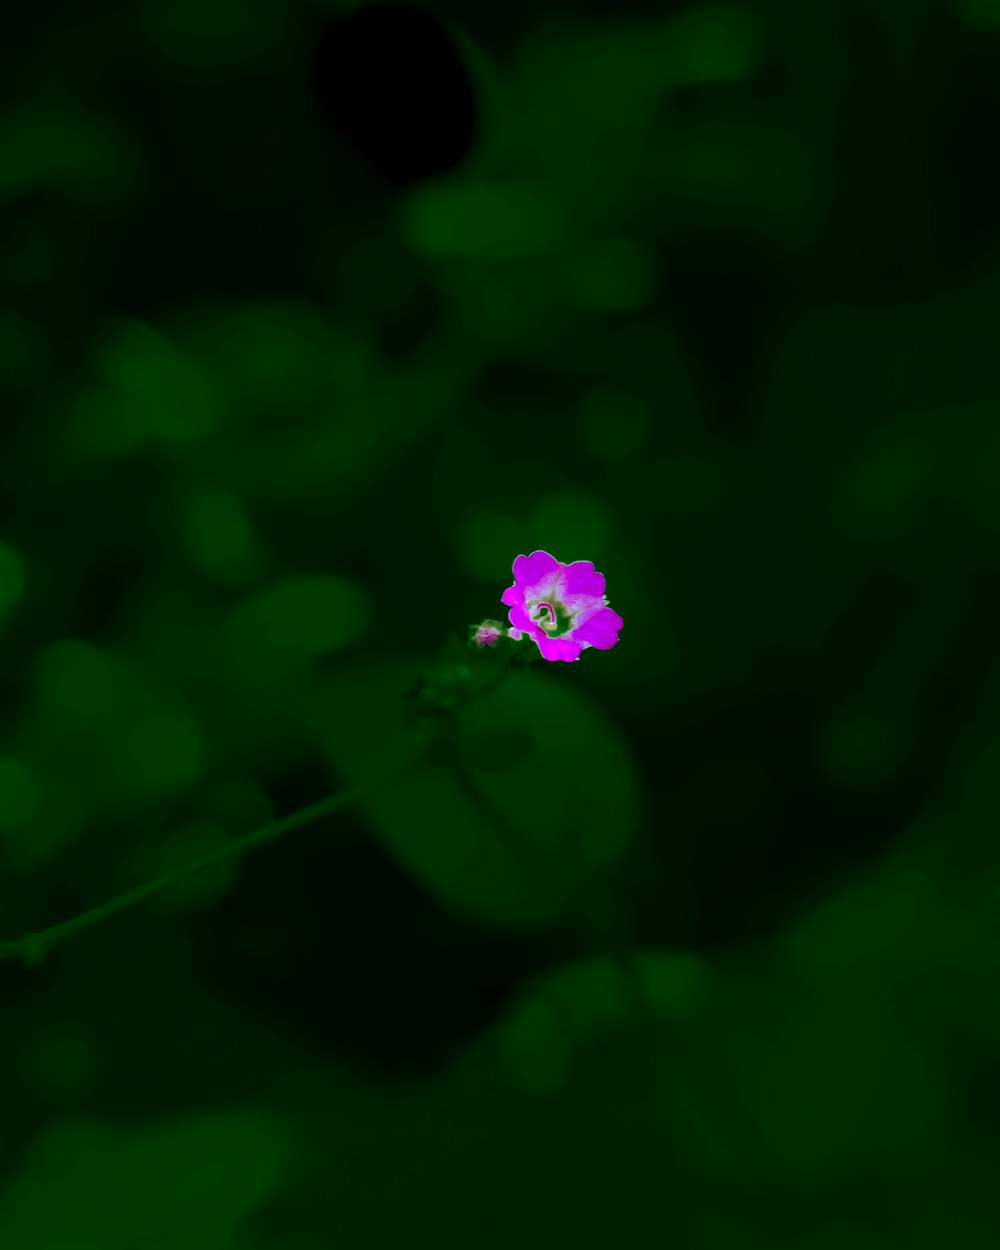 a small purple flower